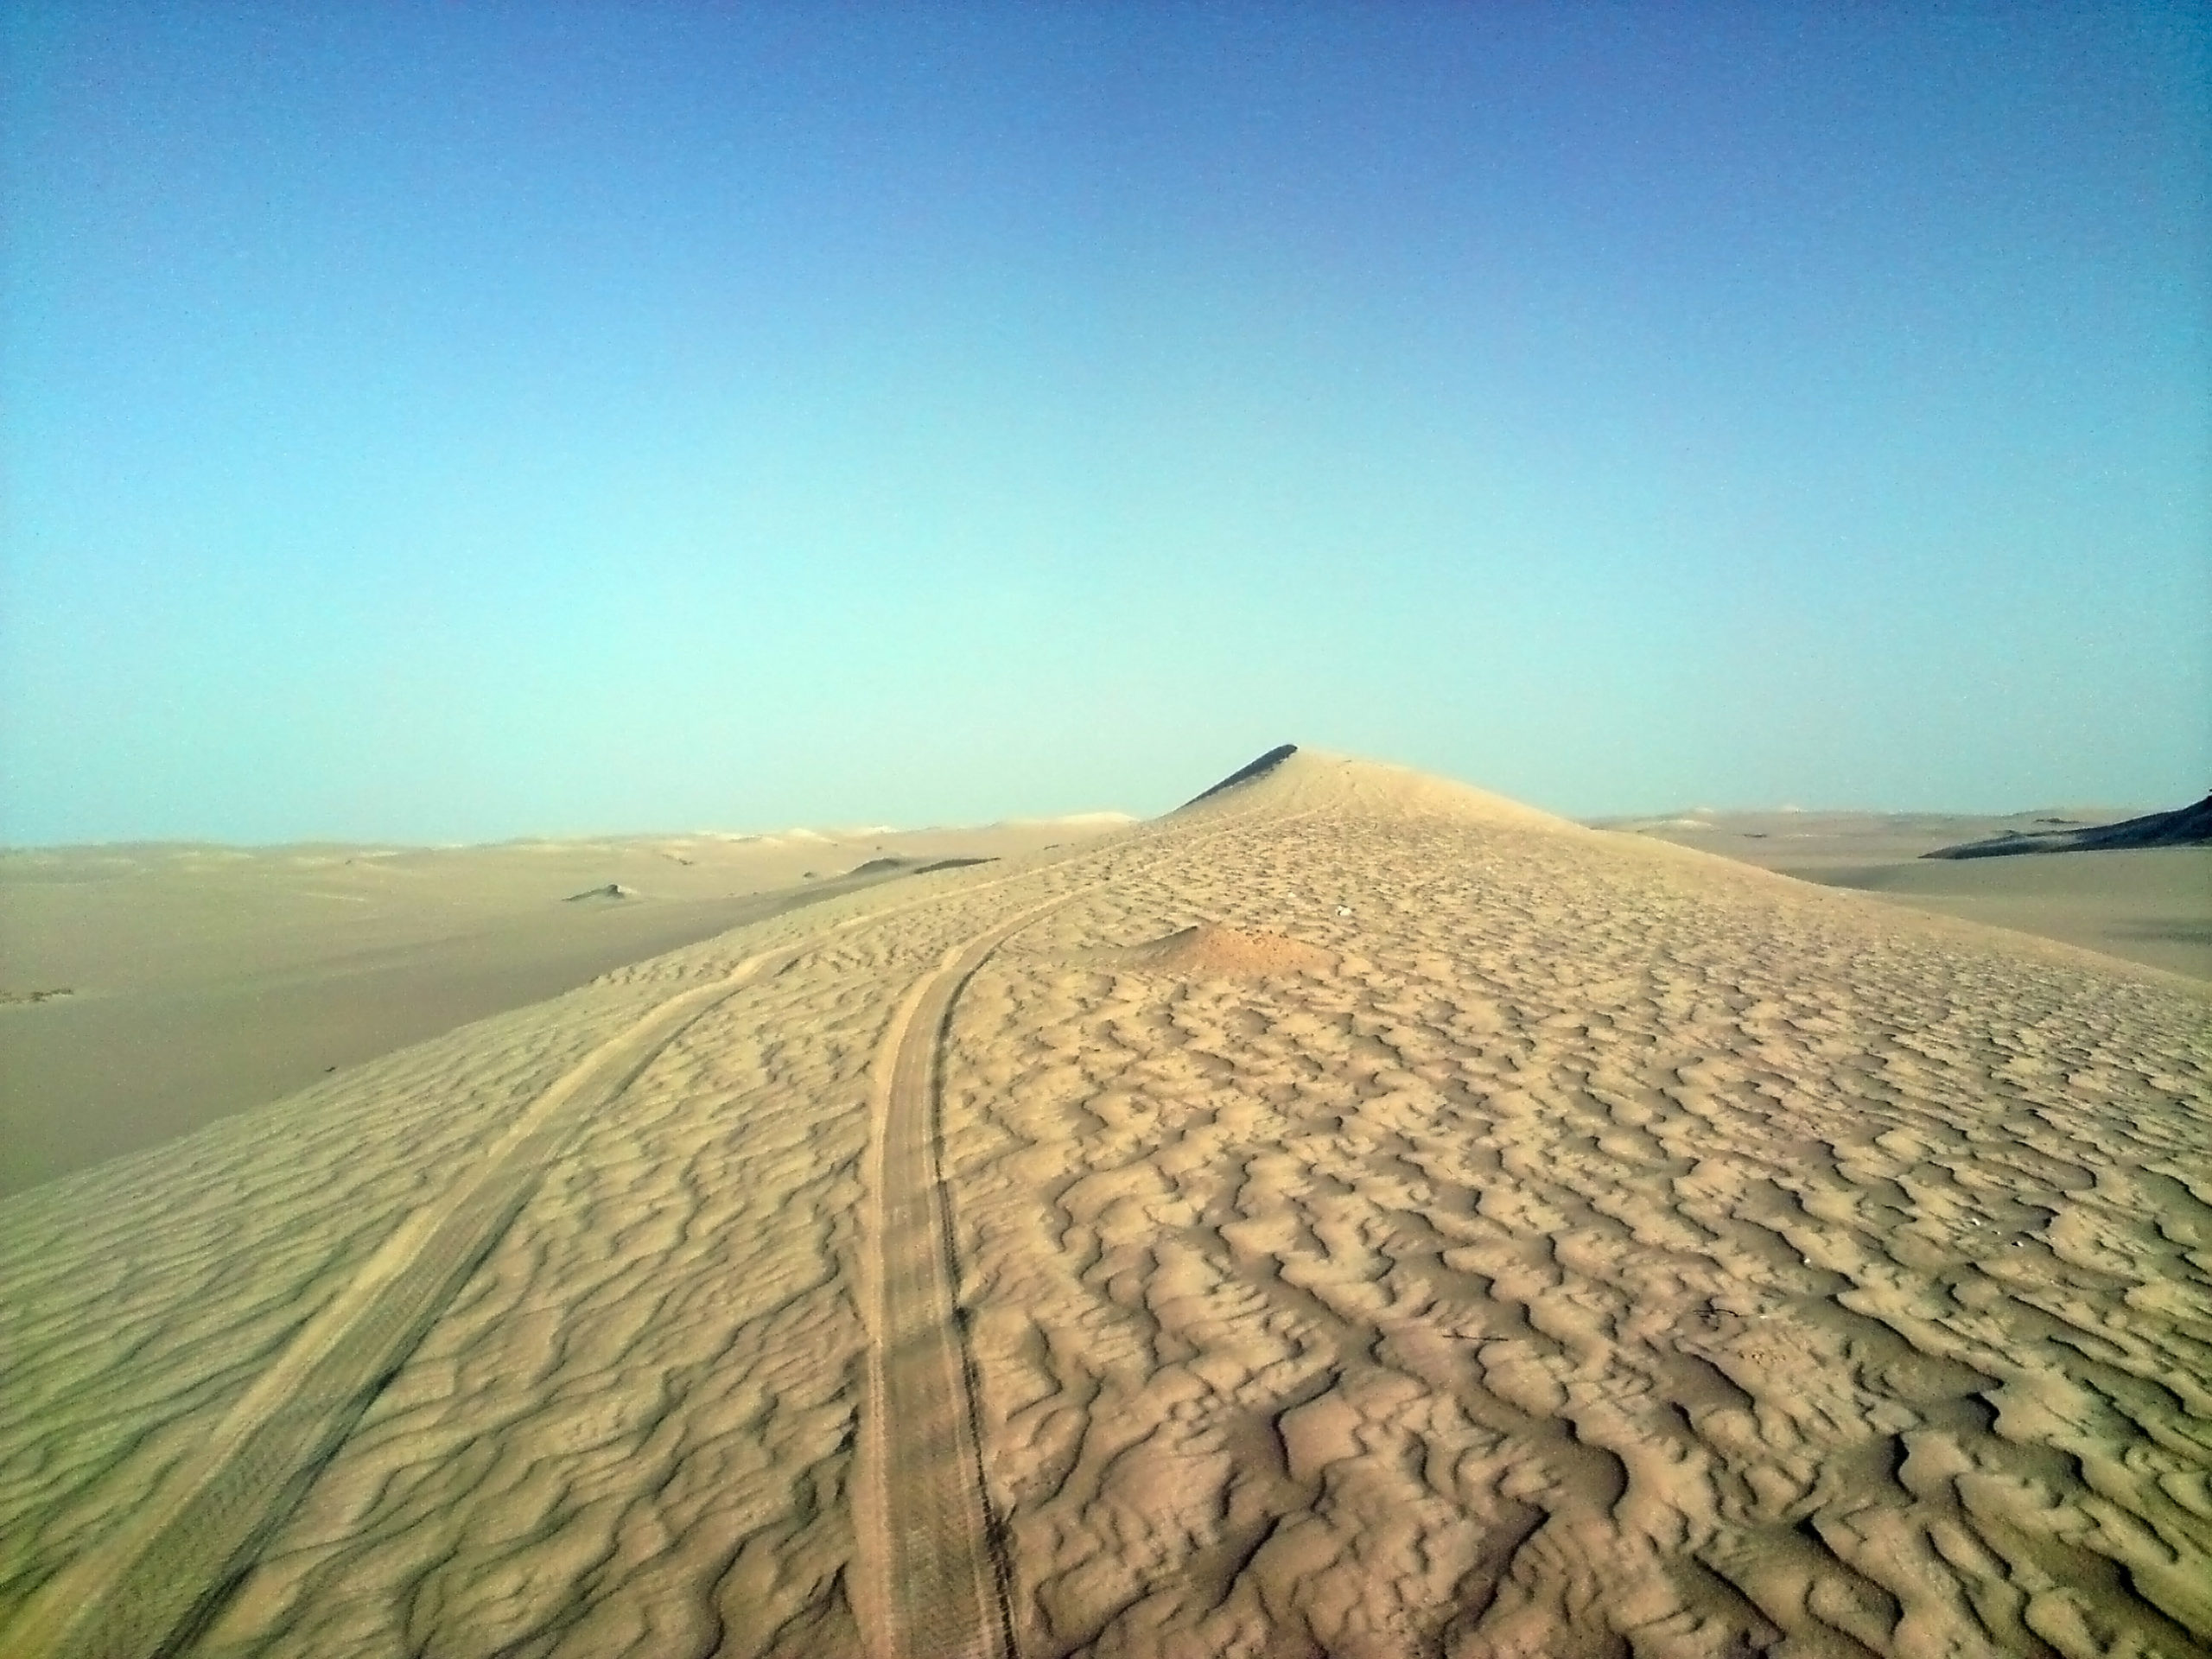 Siwa desert